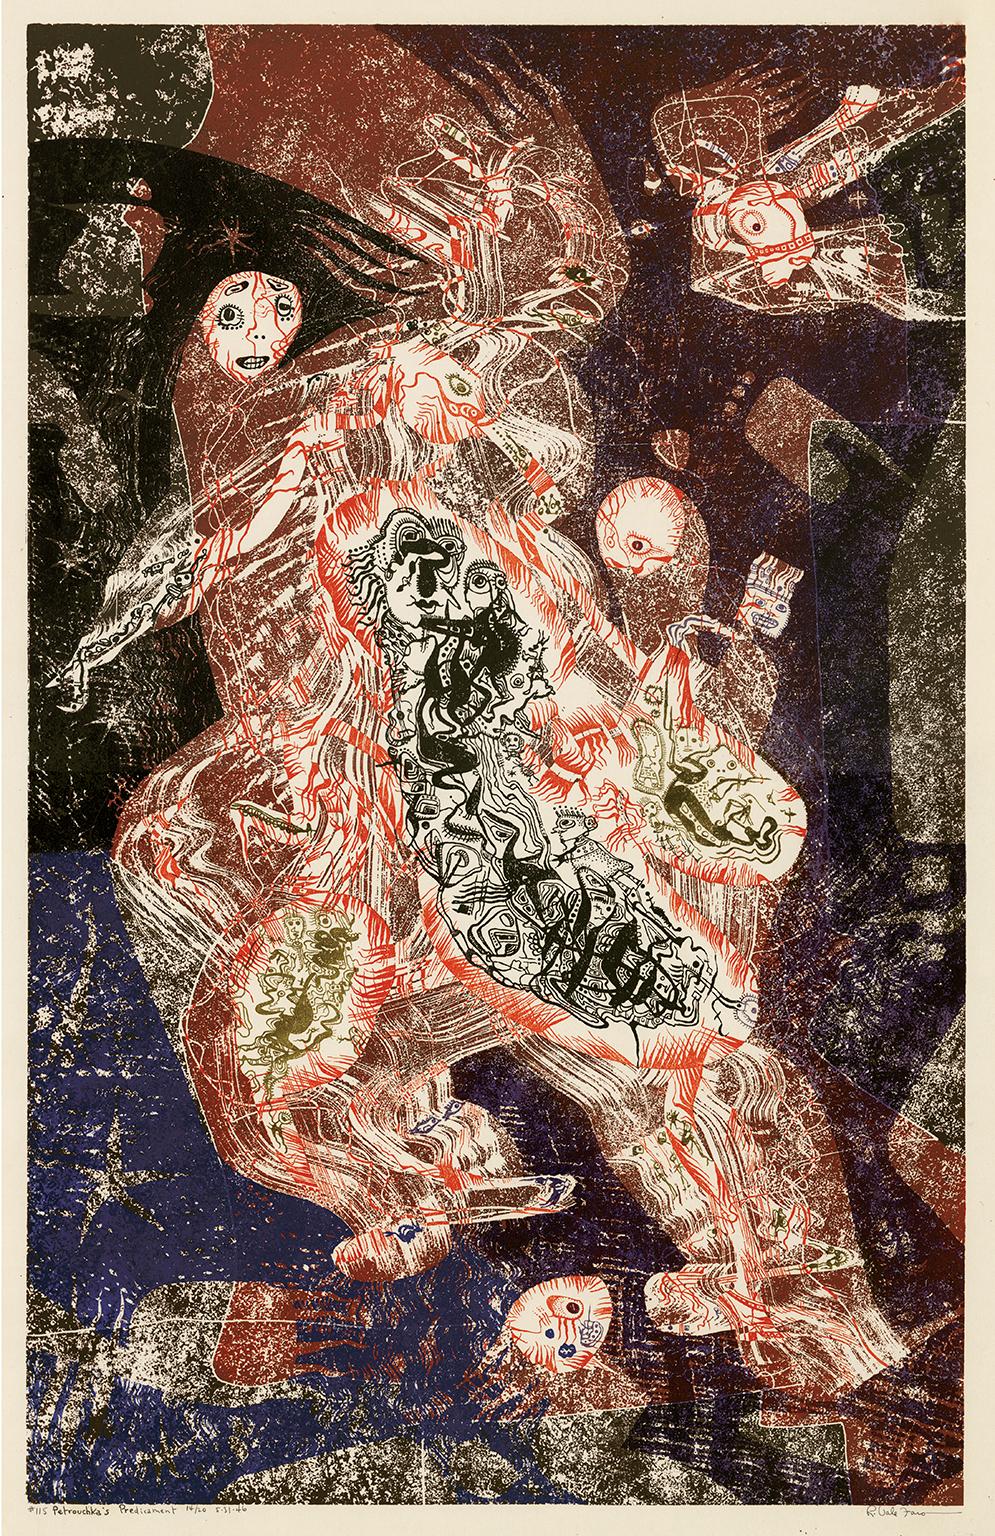 Robert Vale Faro Abstract Print - 'Petrouchka's Predicament' — Mid-century American Surrealism